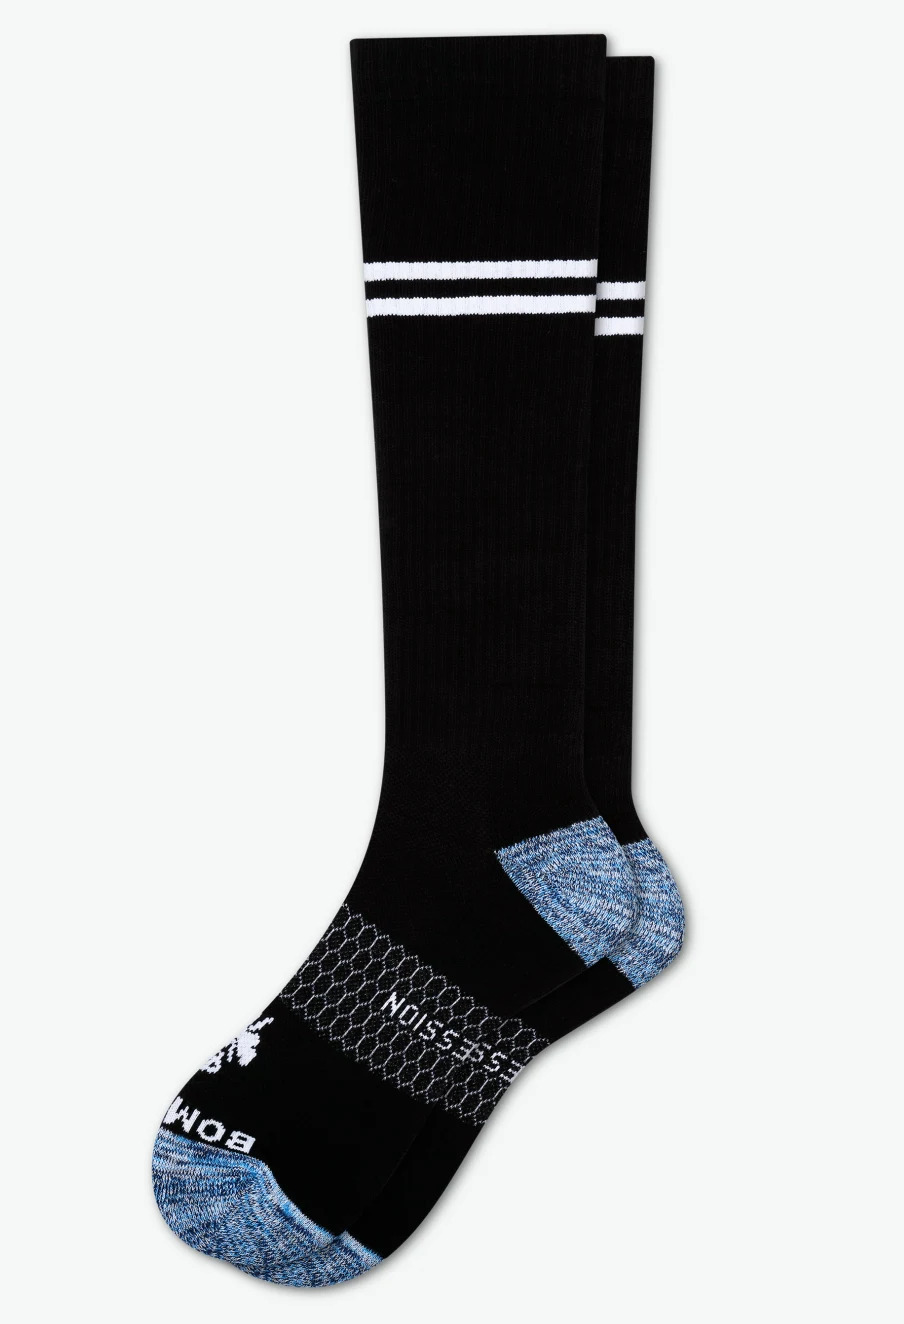 bombas-compression-socks